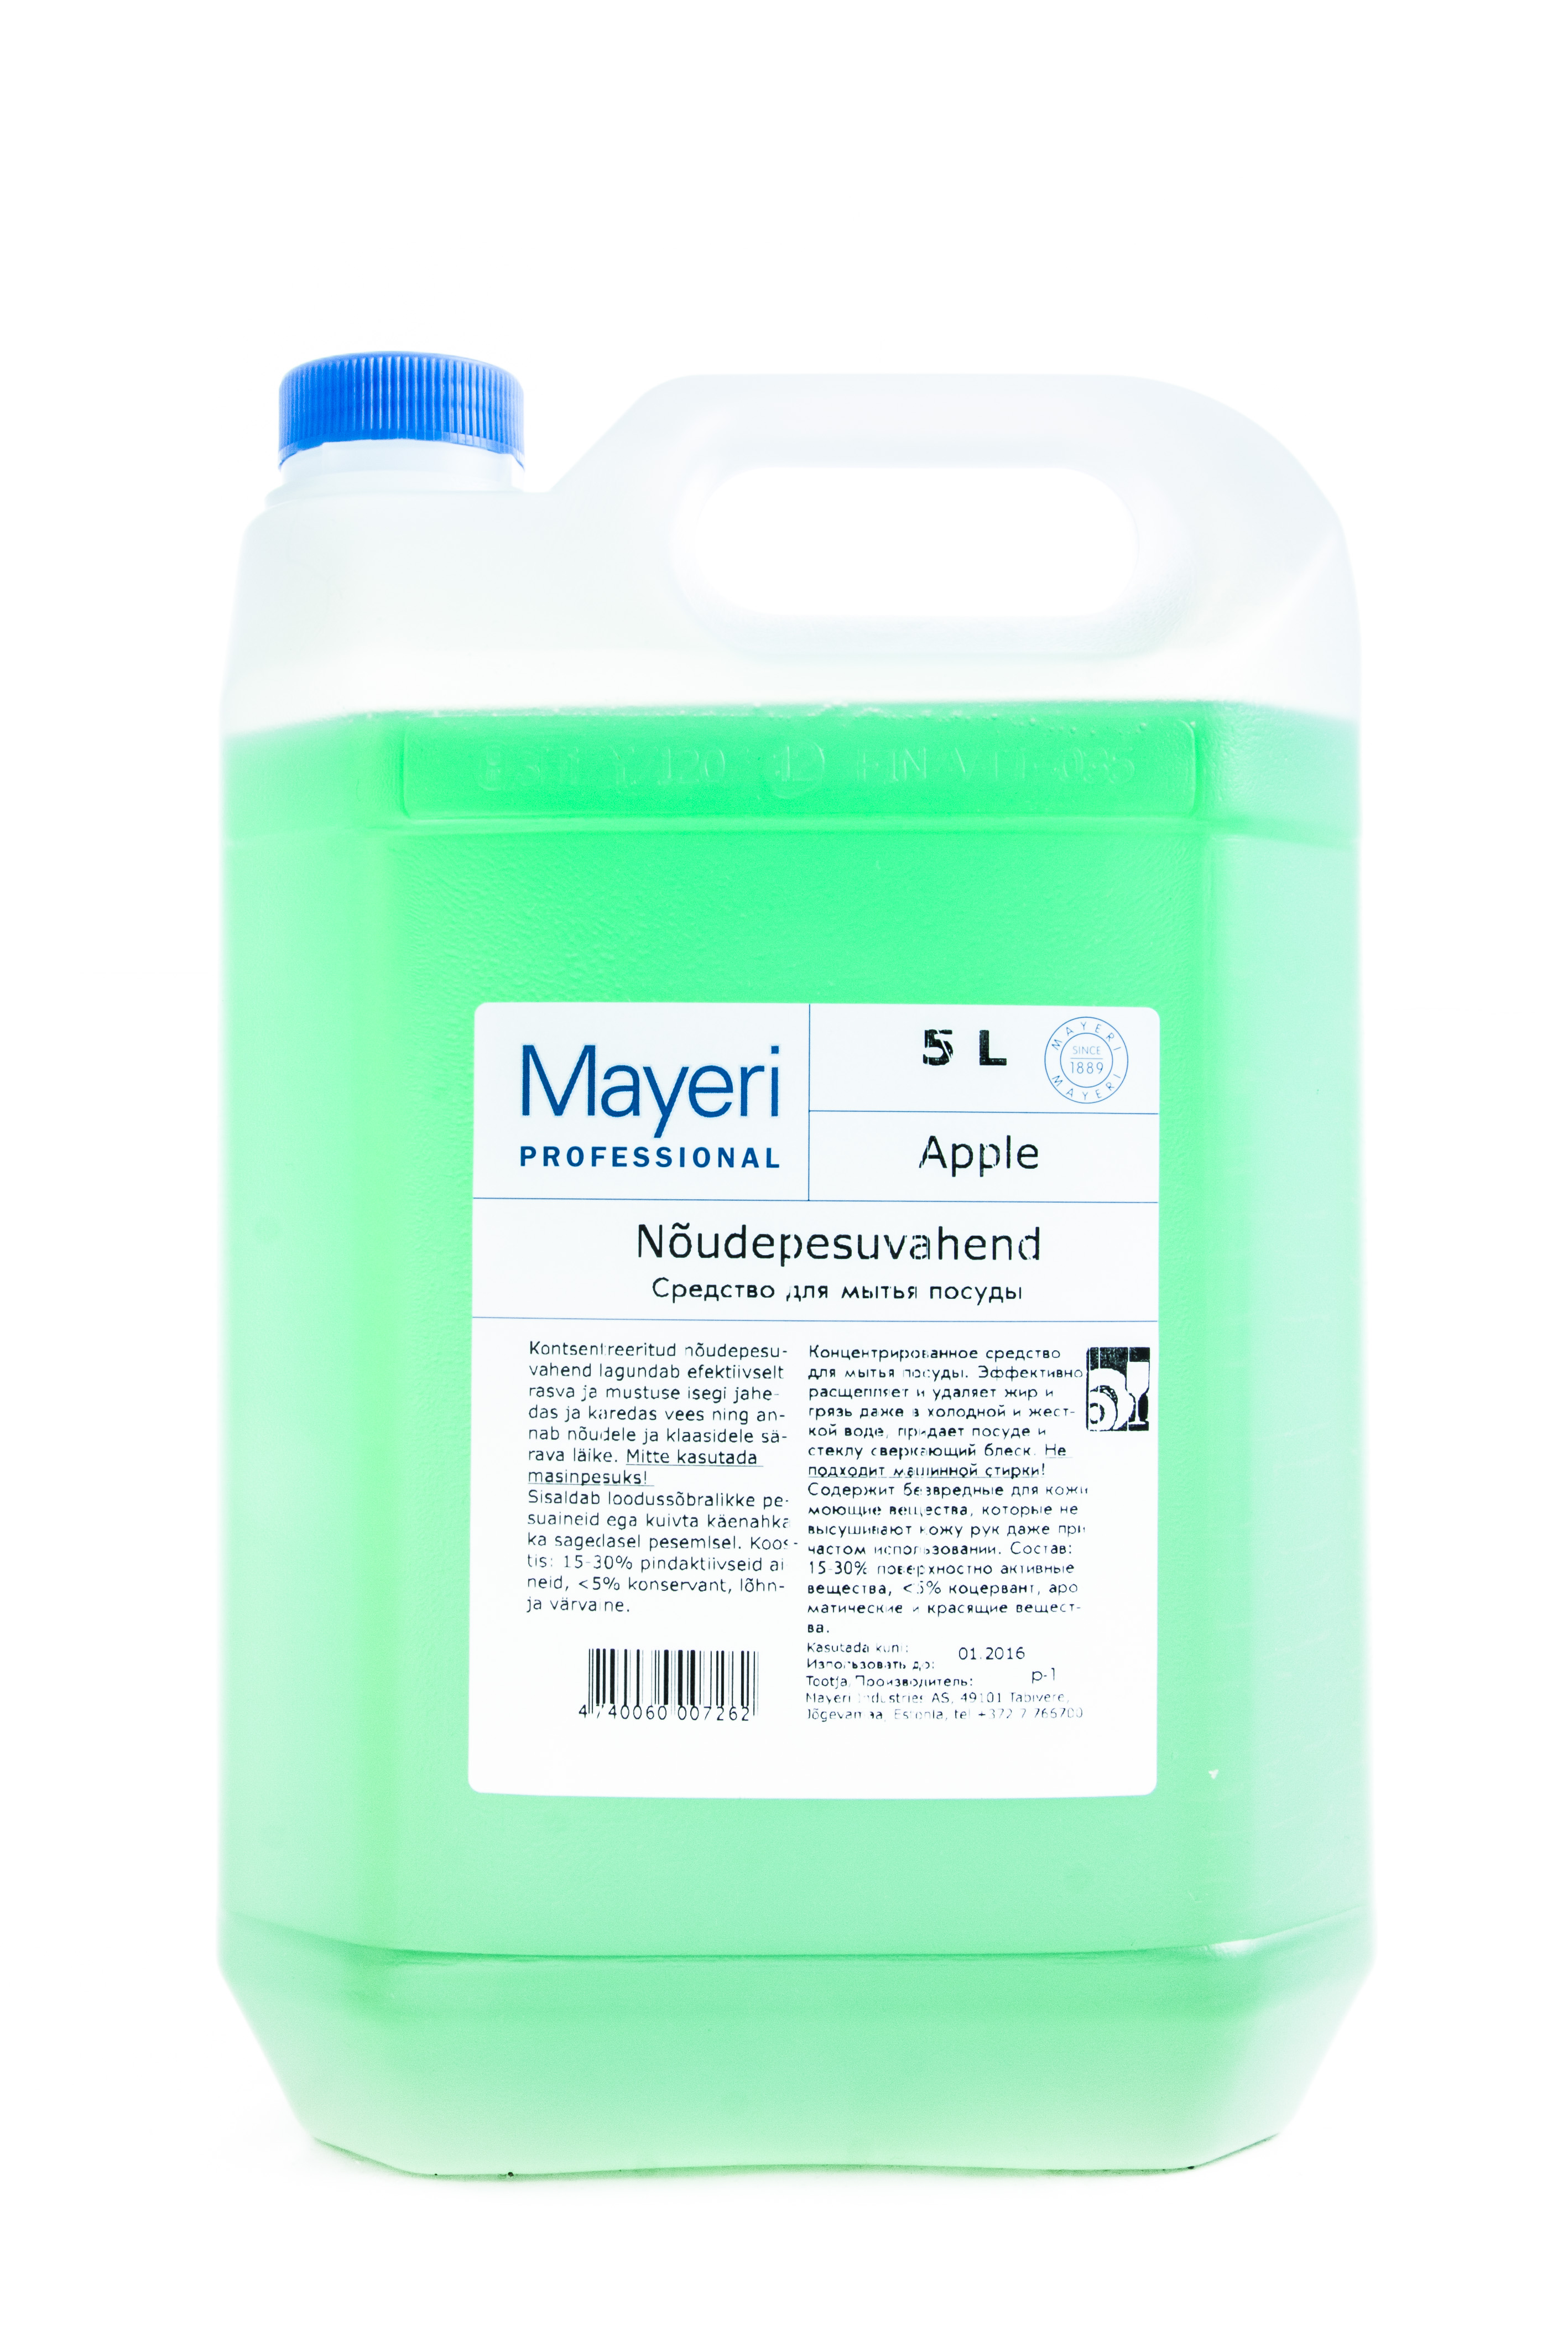 Mayeri Professional nõudepesuvahend 5L õuna lõhnaga